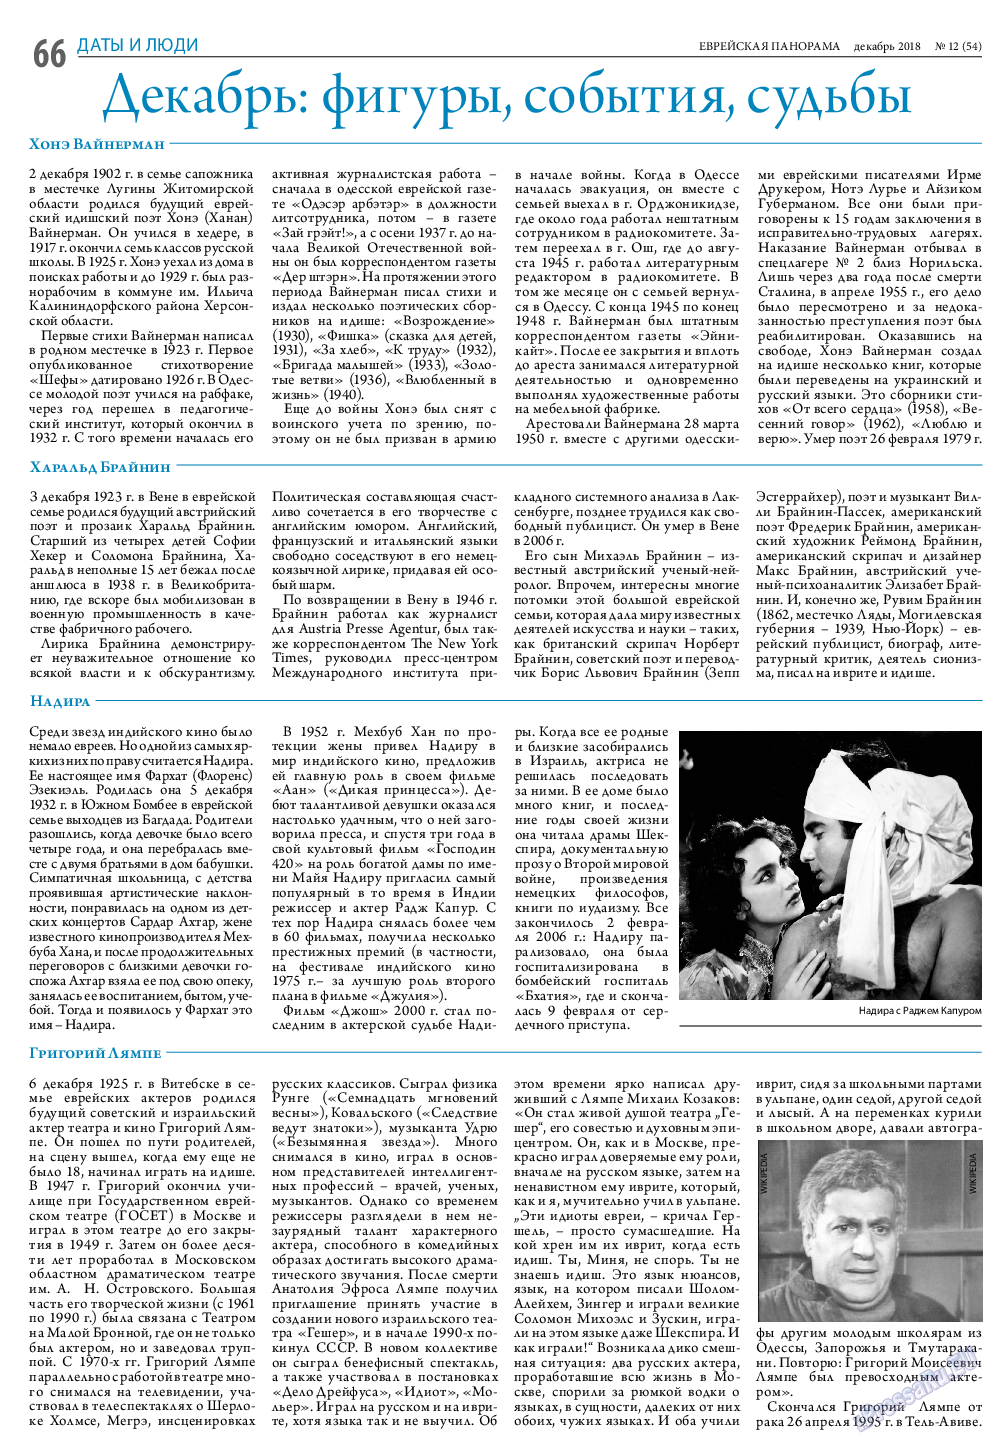 Еврейская панорама, газета. 2018 №12 стр.66